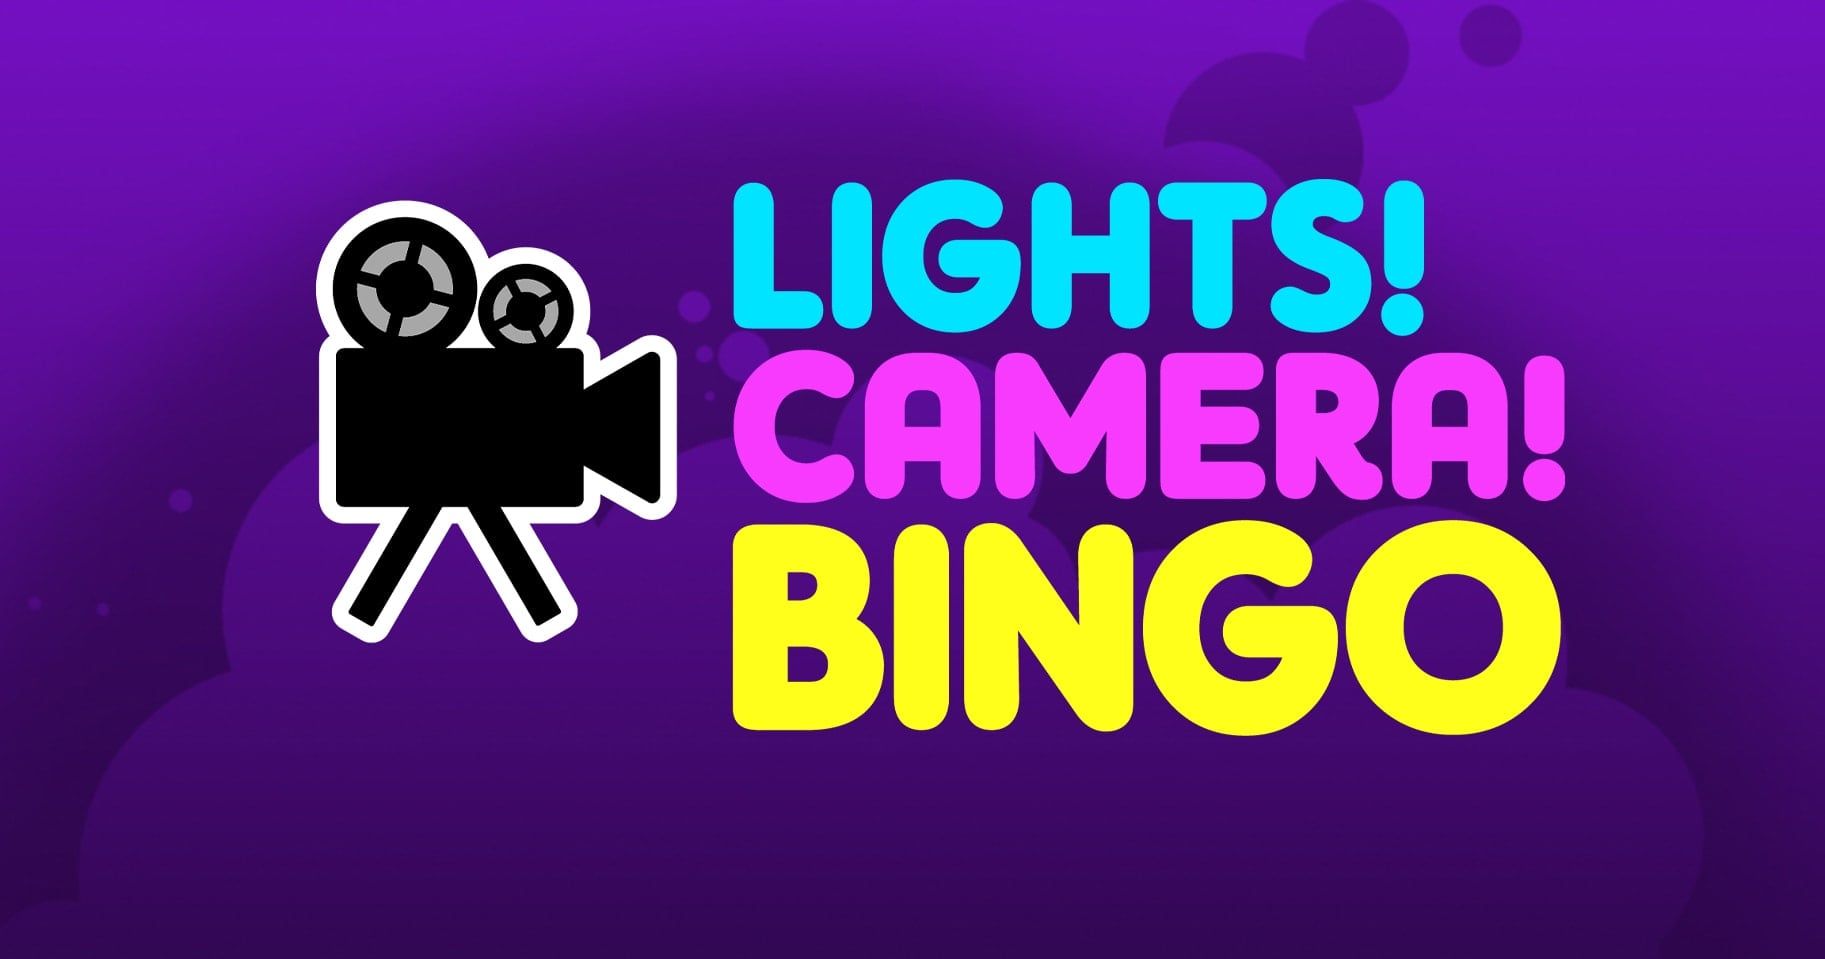 Lights Camera Bingo Casino Bonus: Spin 5 Times for Free
